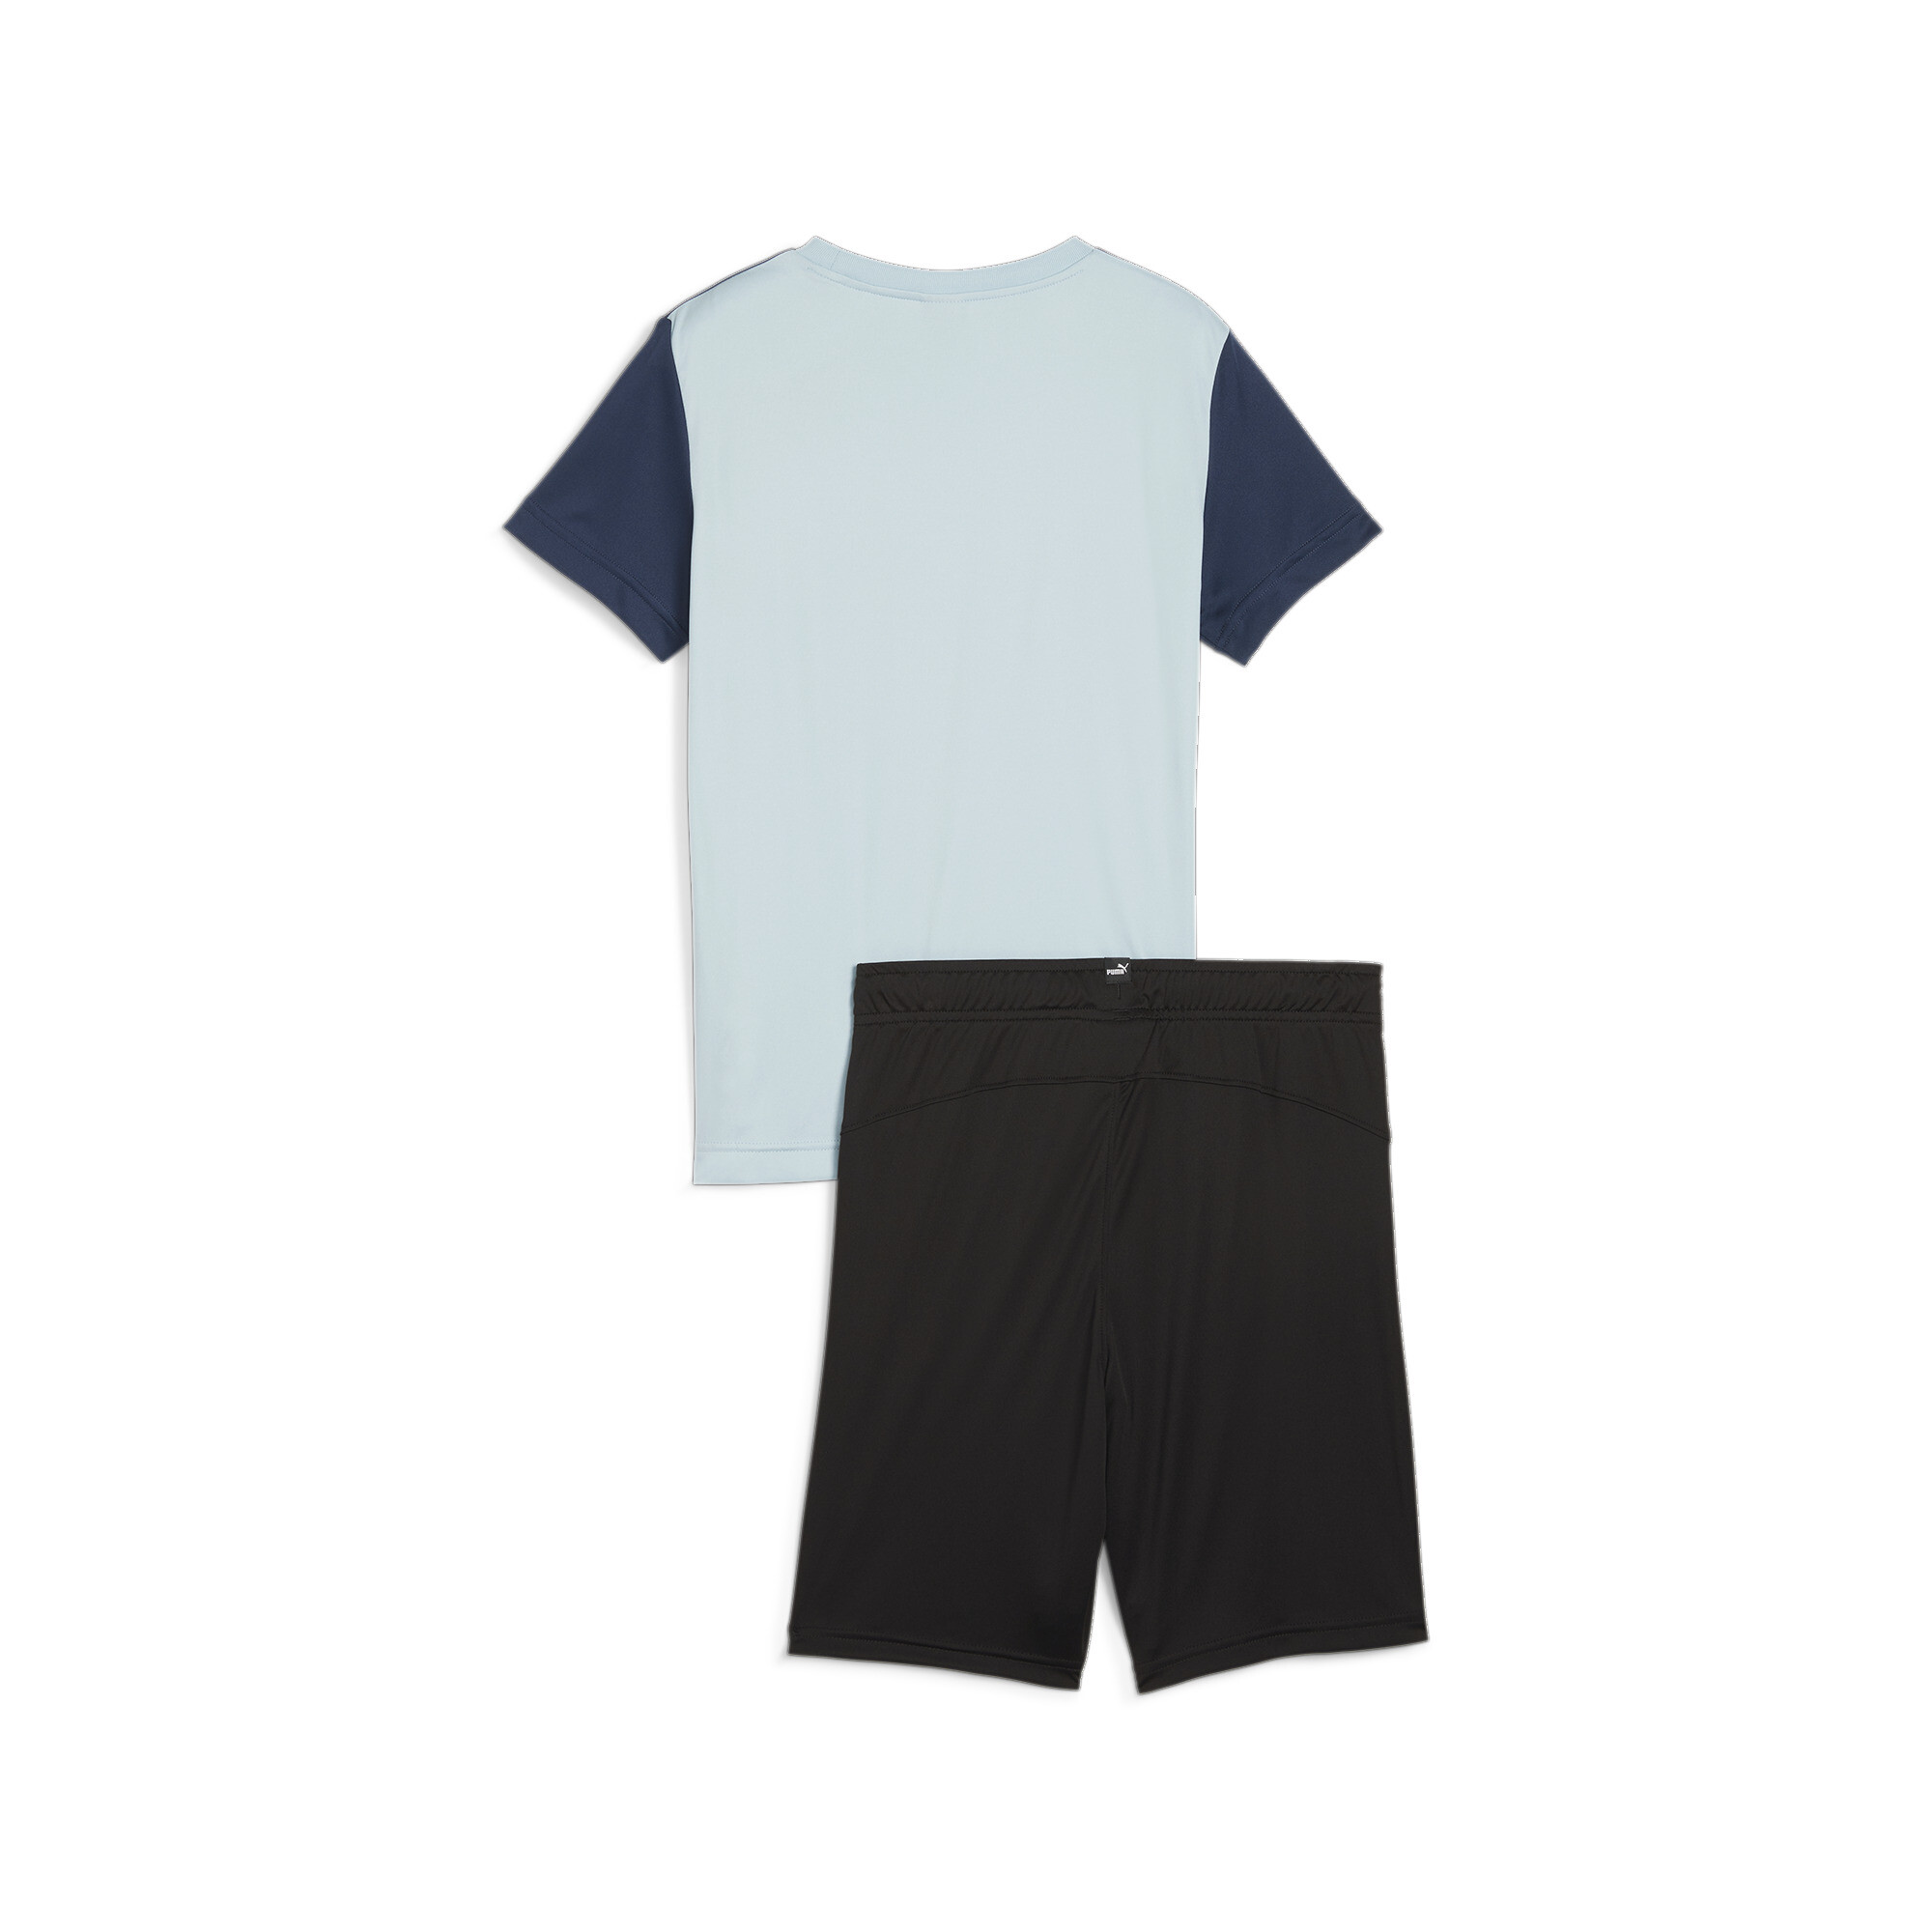 Men's Puma Polyester Youth Shorts Set, Blue, Size 4-5Y, Clothing